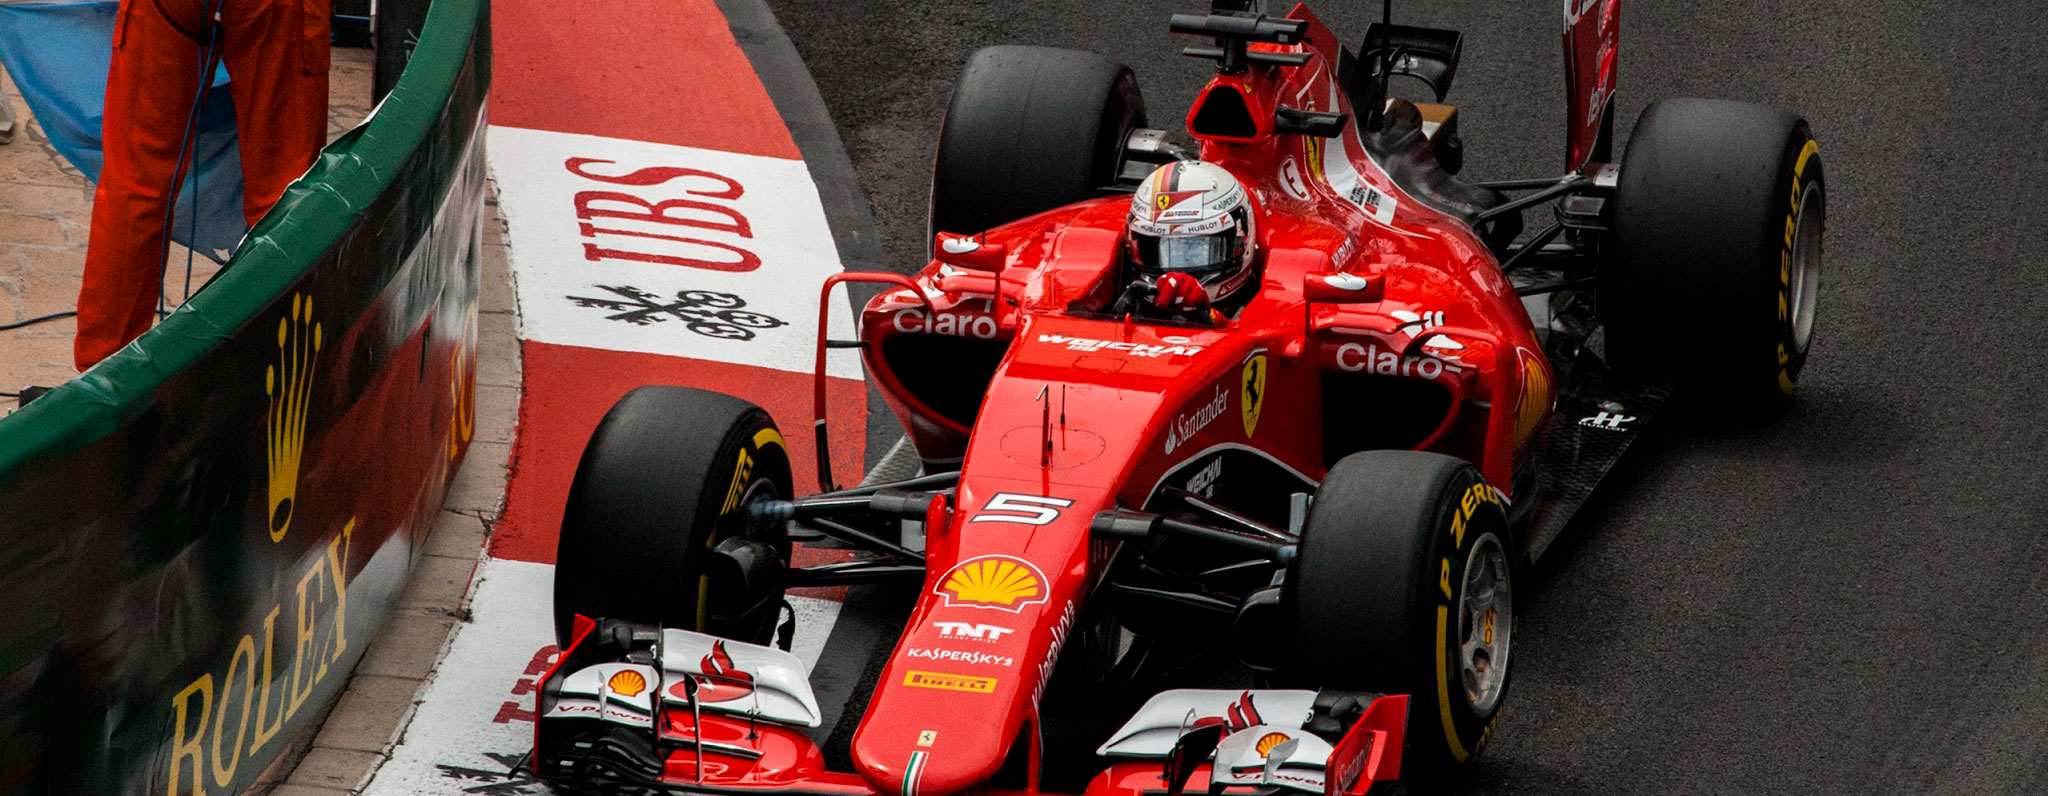 Grand Prix de Formule 1 de Monaco 2017